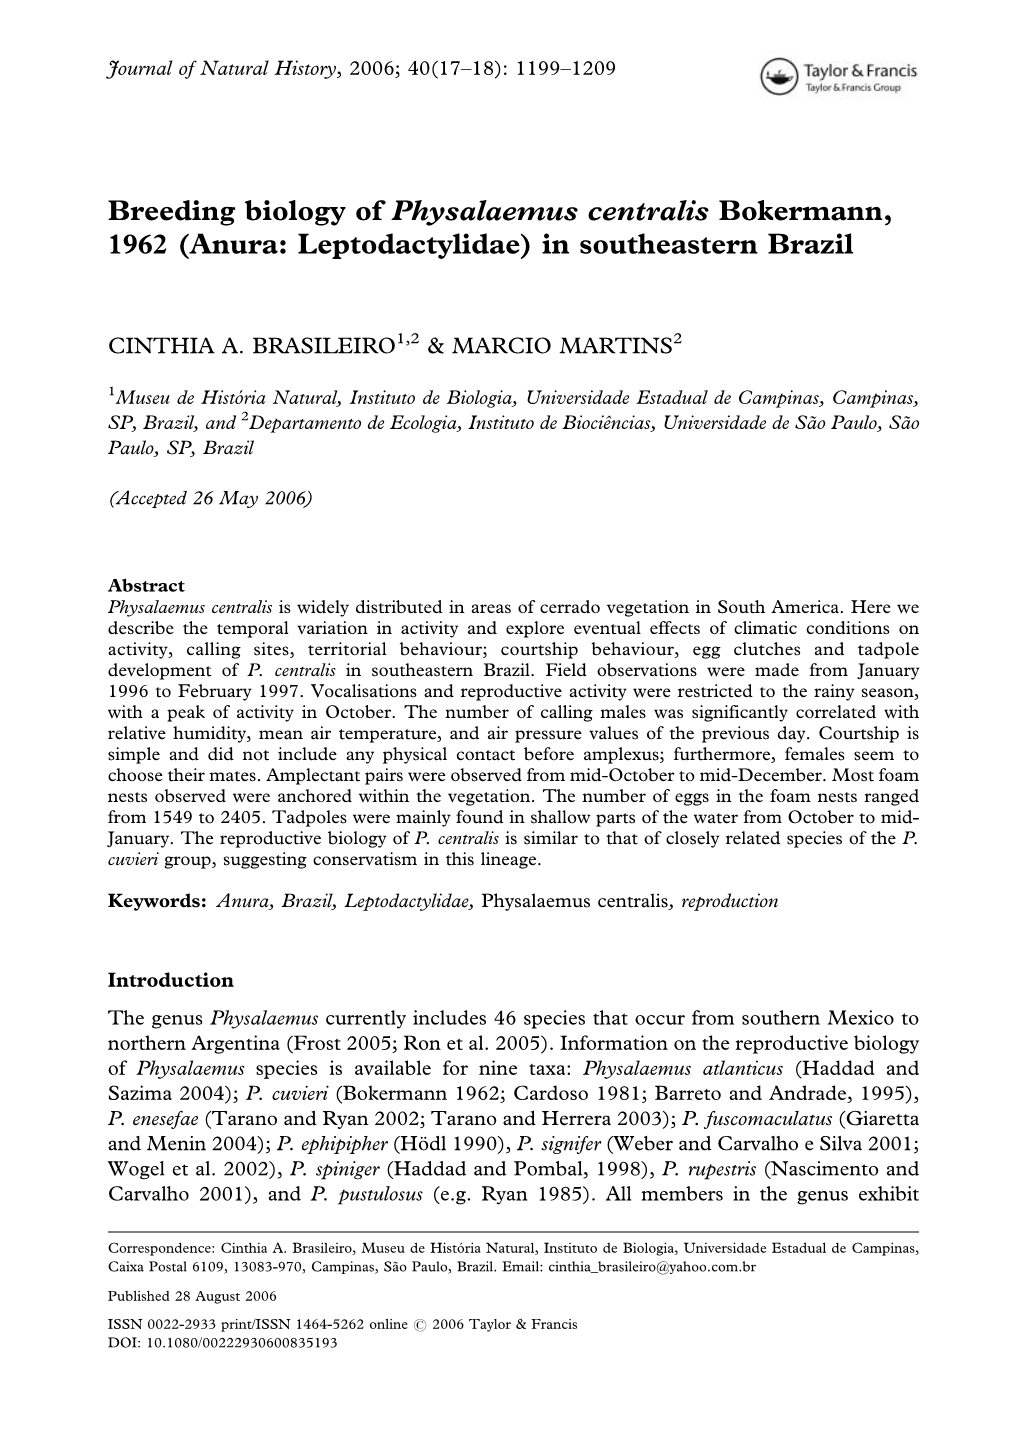 Breeding Biology of Physalaemus Centralis Bokermann, 1962 (Anura: Leptodactylidae) in Southeastern Brazil